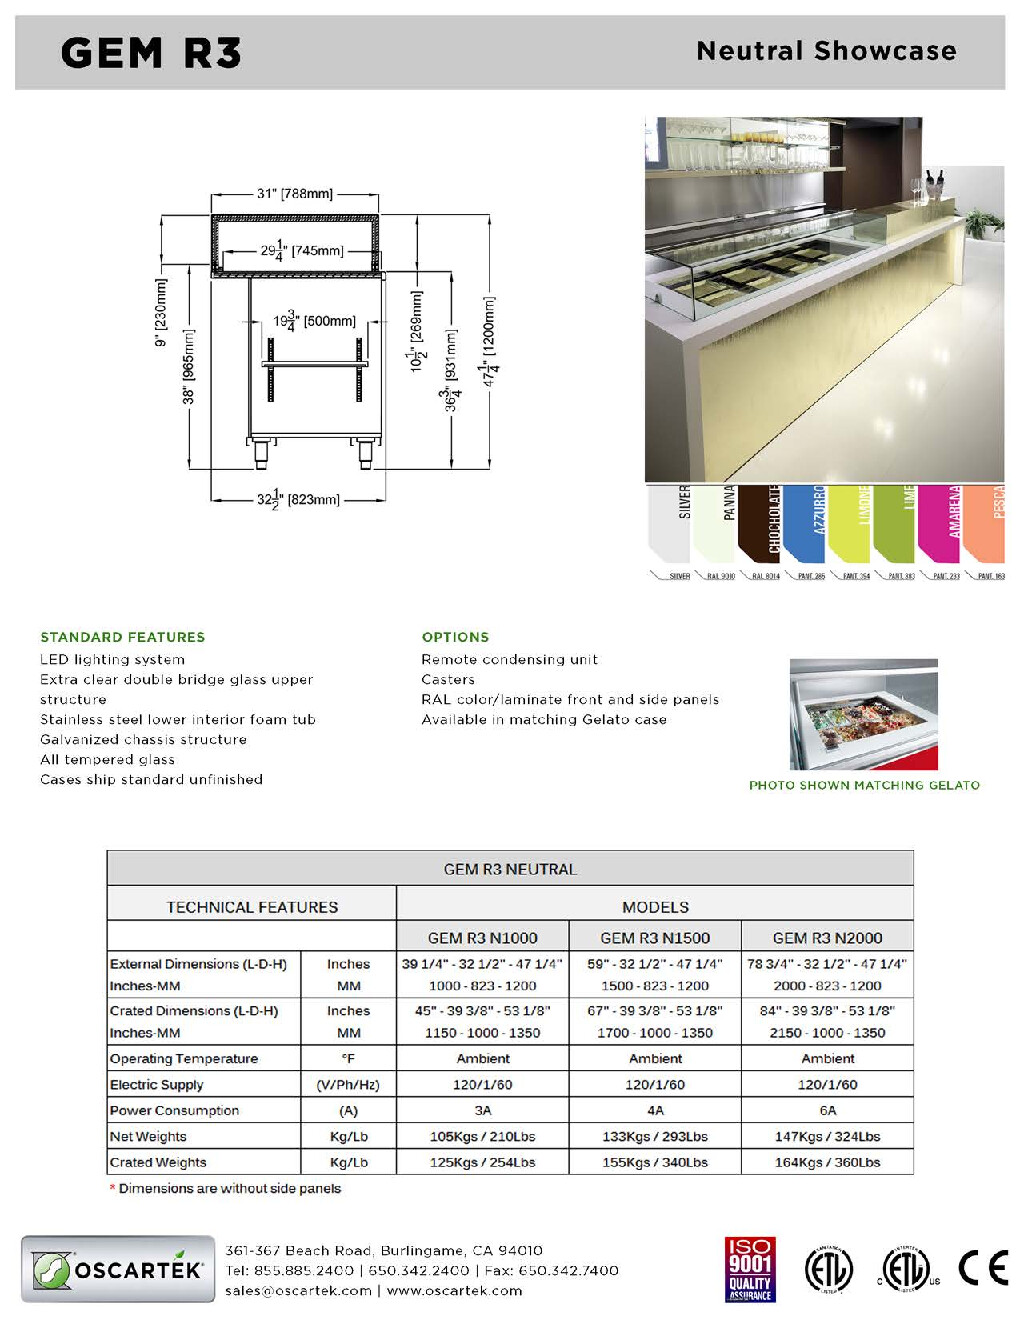 Oscartek GEM R3 N1000 Non-Refrigerated Bakery Display Case